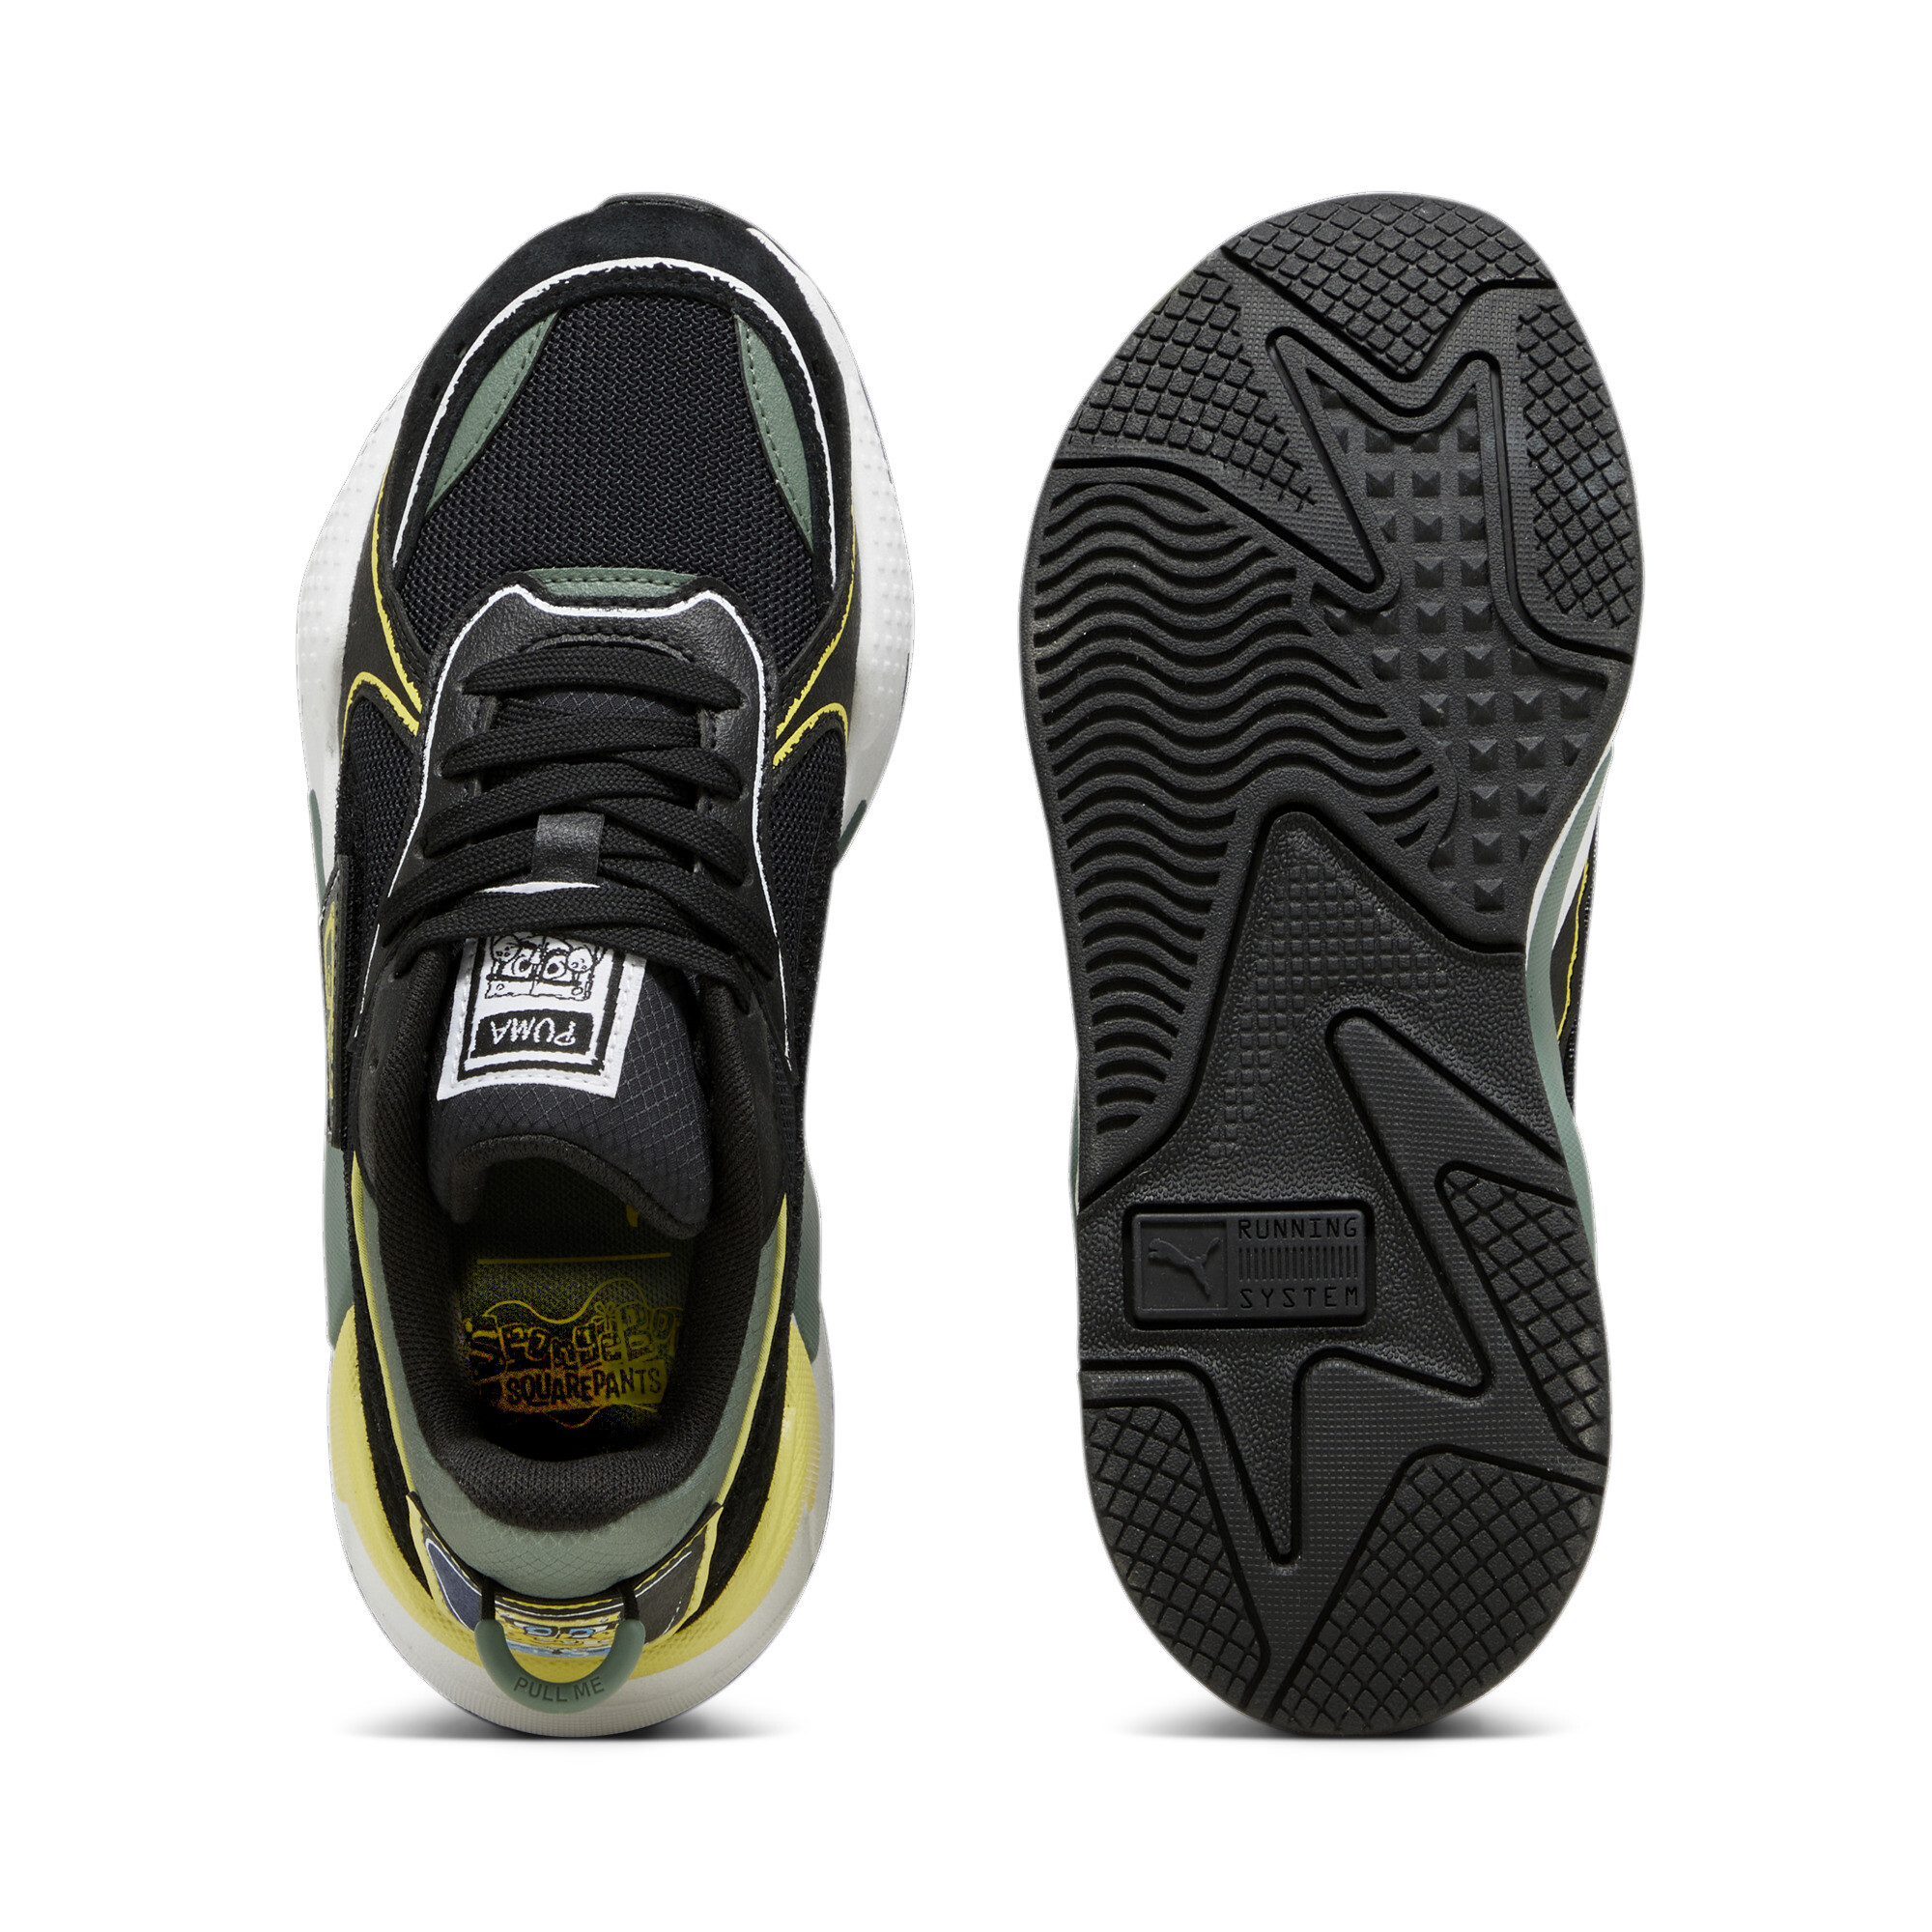 PUMA X SPONGEBOB SQUAREPANTS RS-X Youth Sneakers In Black, Size EU 37